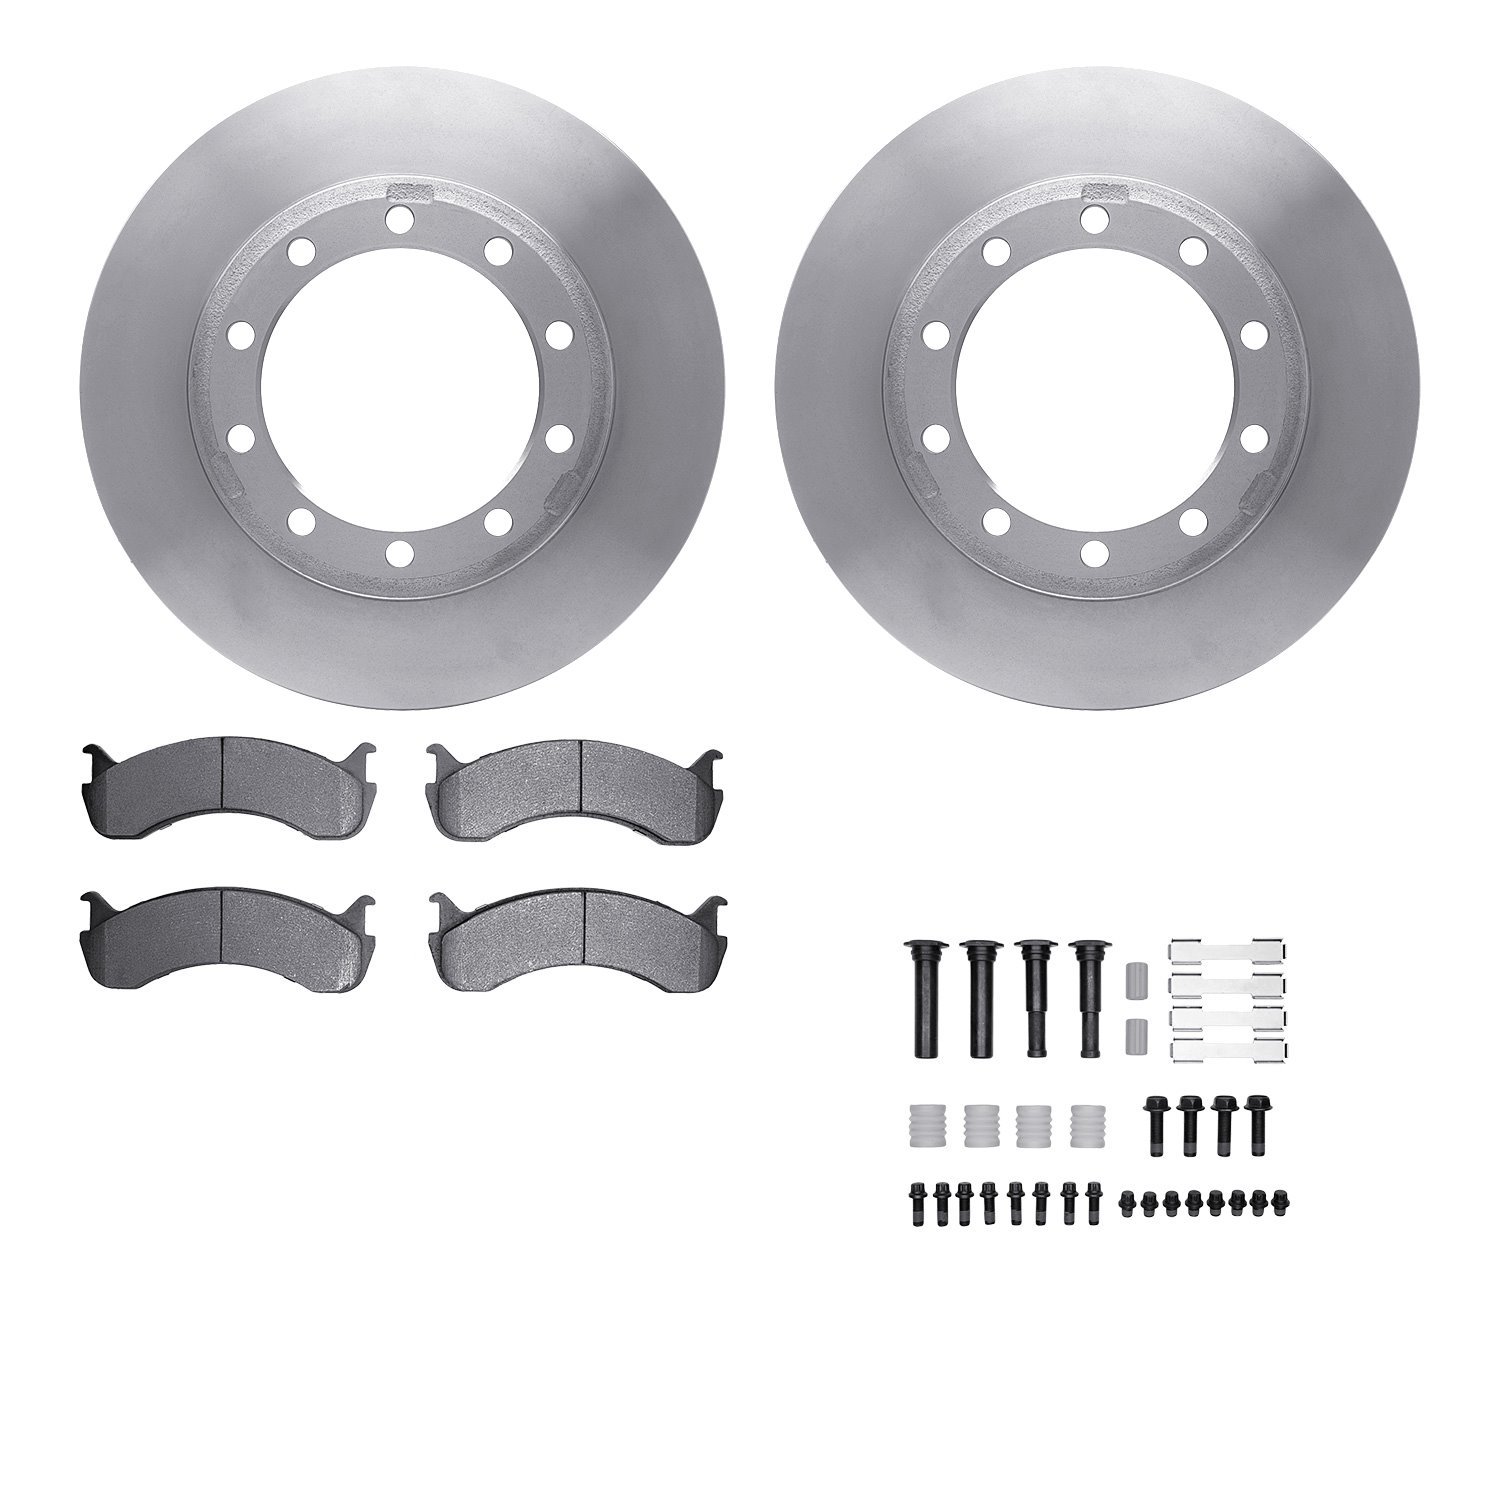 6212-99765 Brake Rotors w/Heavy-Duty Brake Pads Kit & Hardware, Fits Select Ford/Lincoln/Mercury/Mazda, Position: Rear